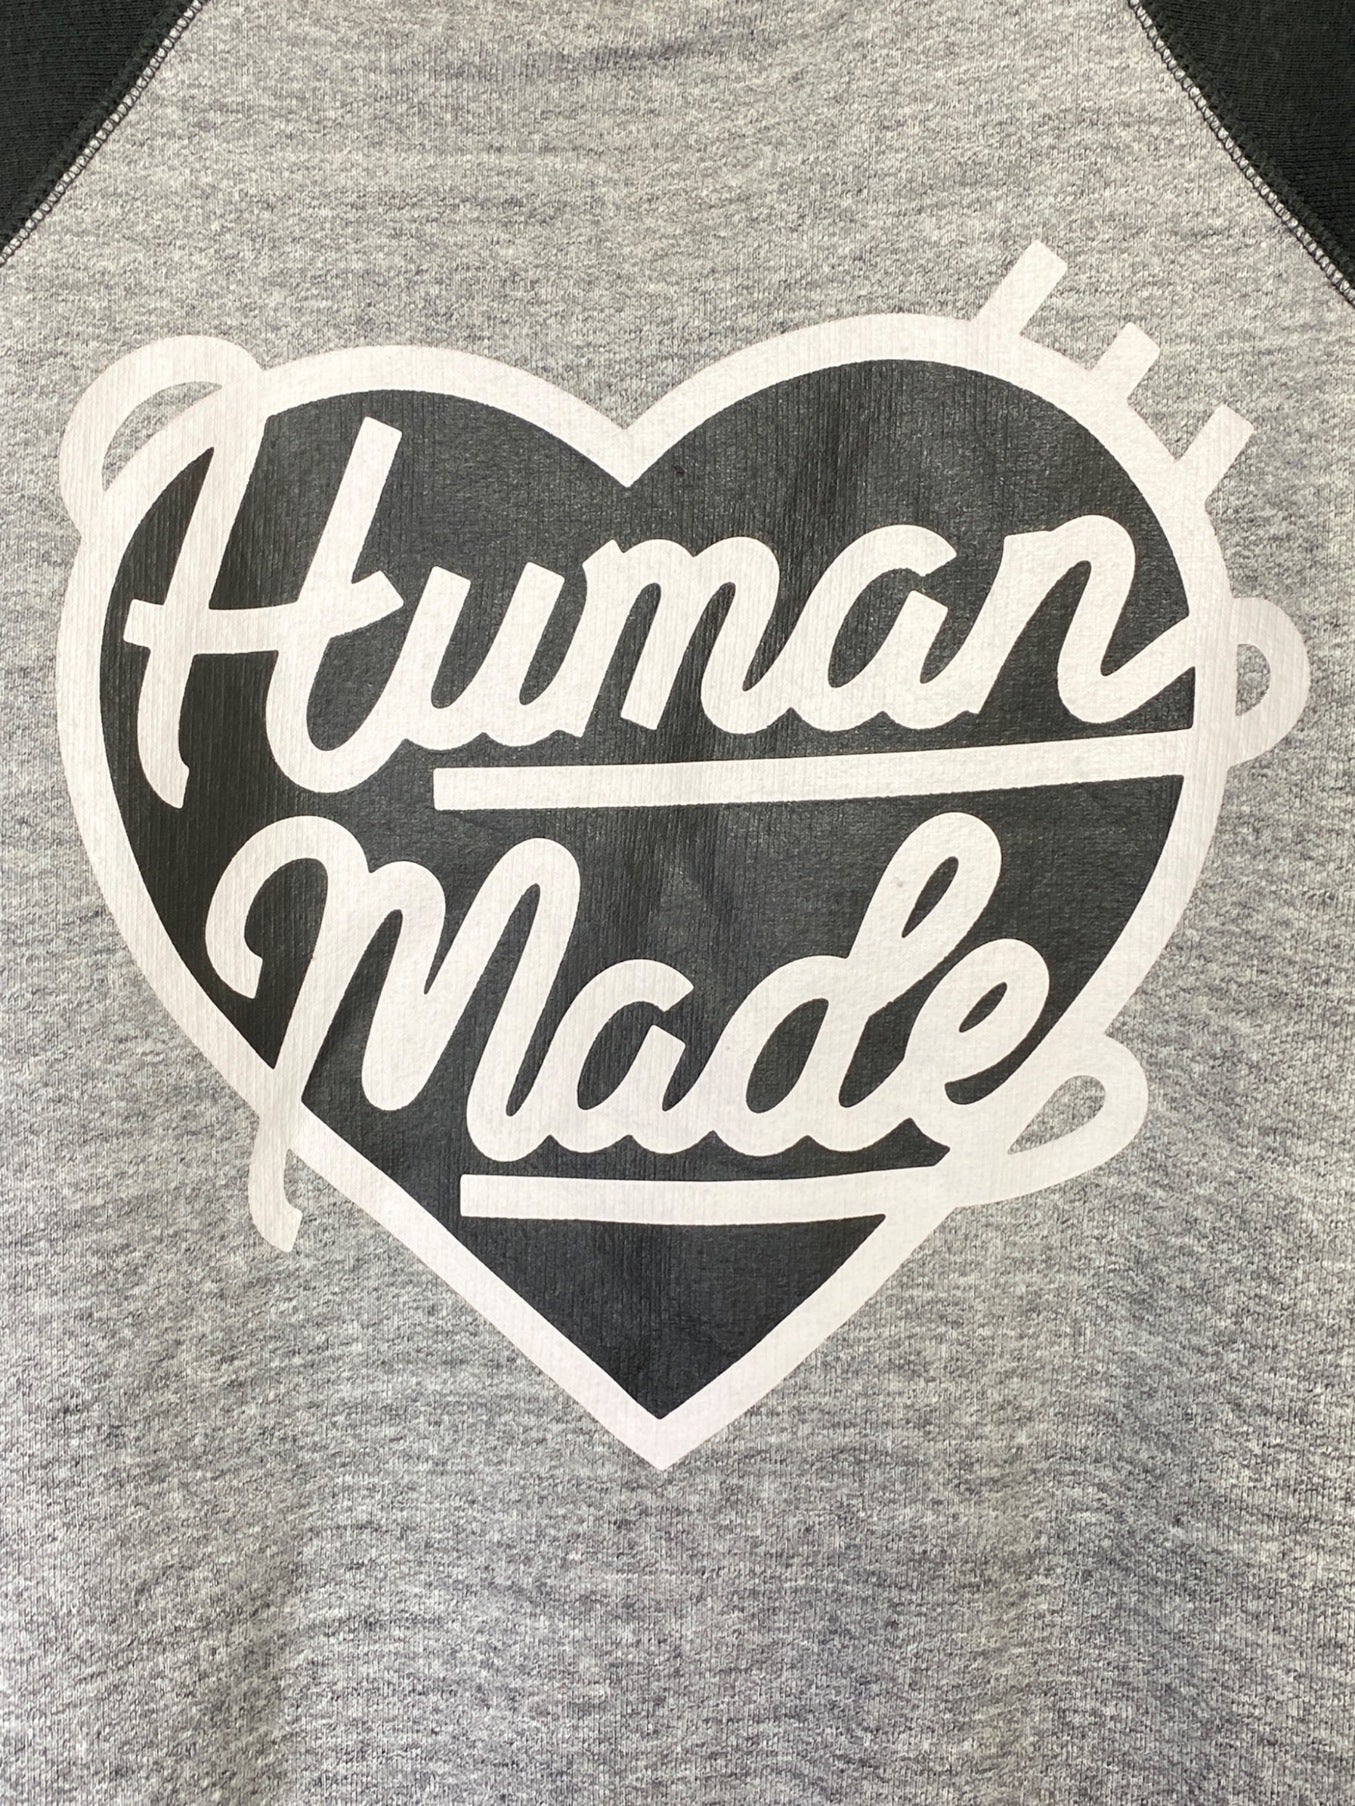 Archive Factory Human Made Heart Logo T-Shirt